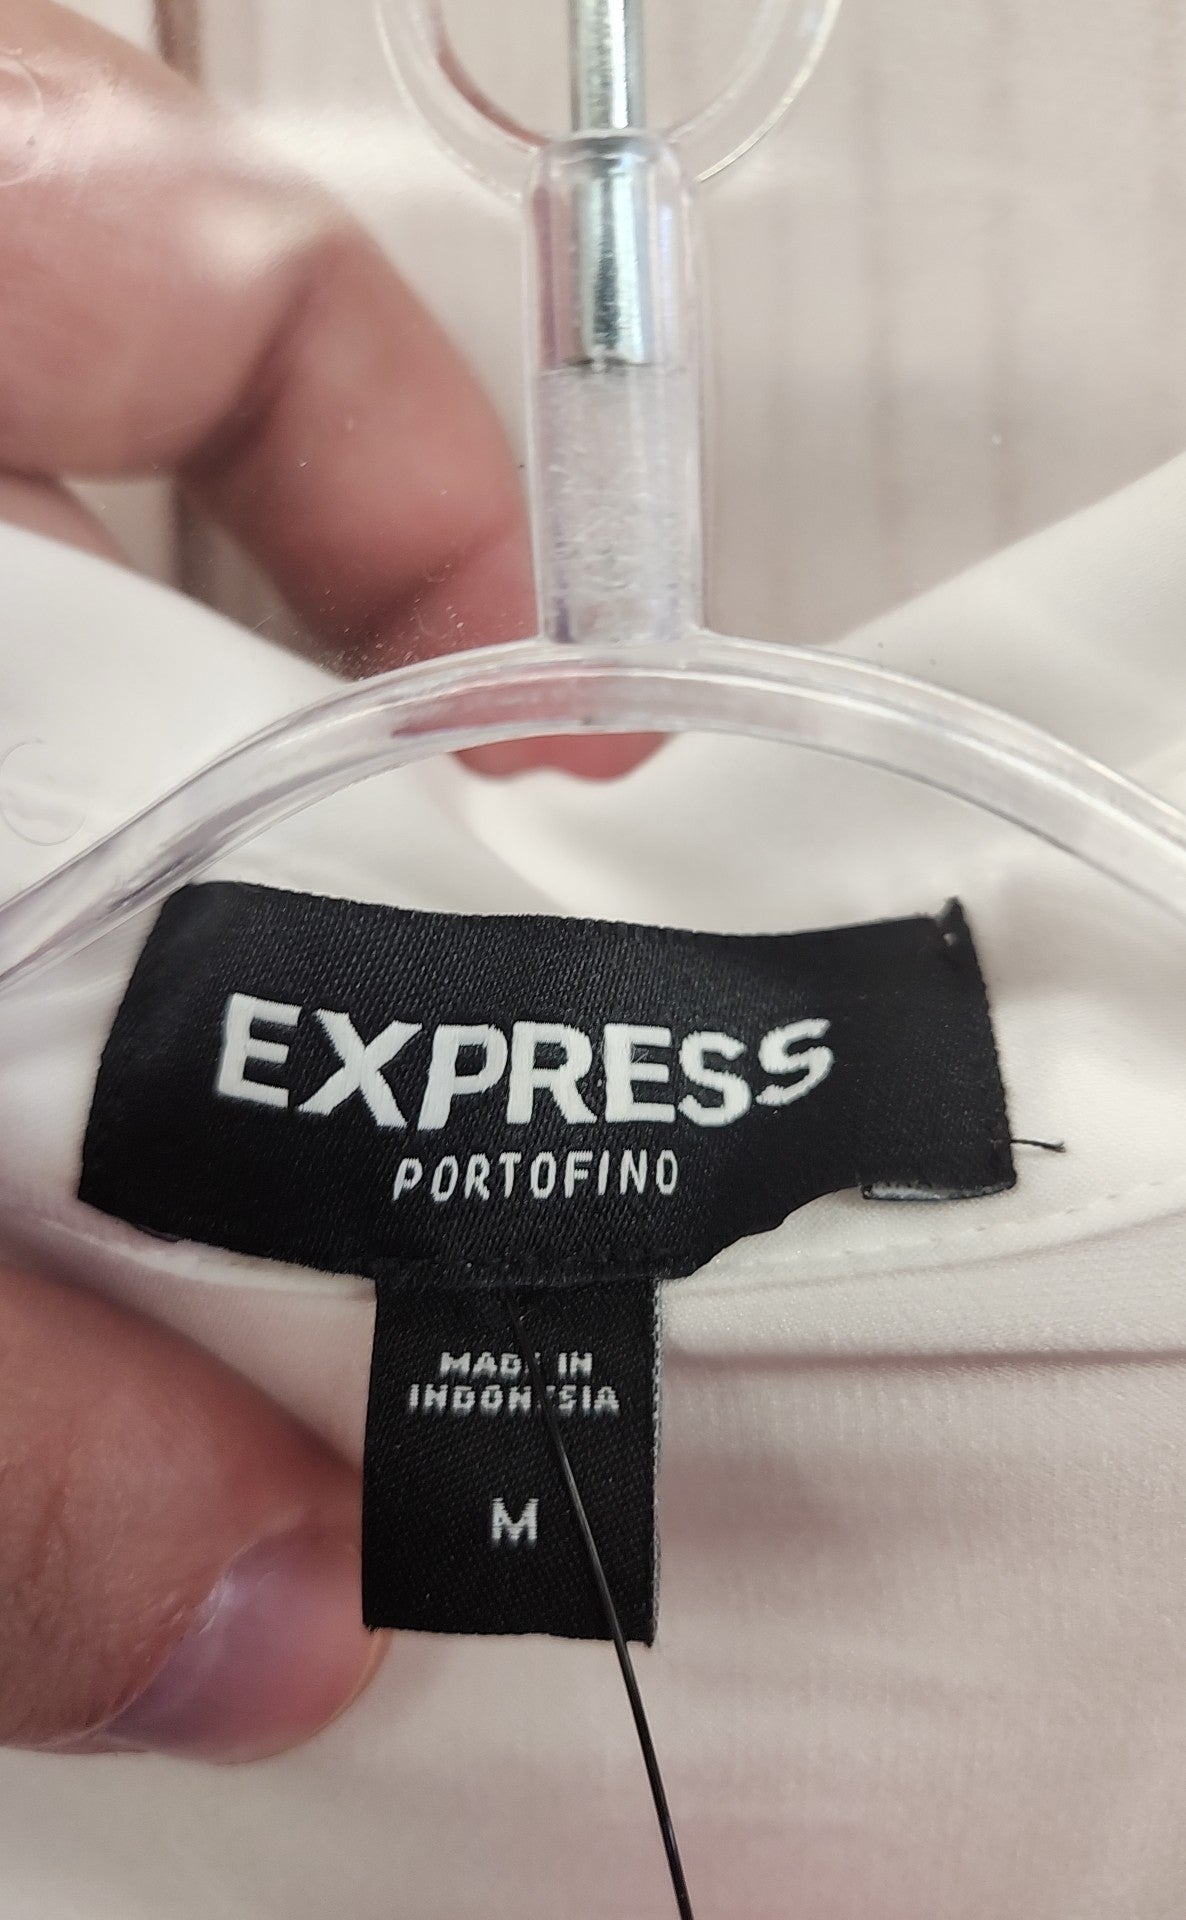 Express Women's Size M White Long Sleeve Top